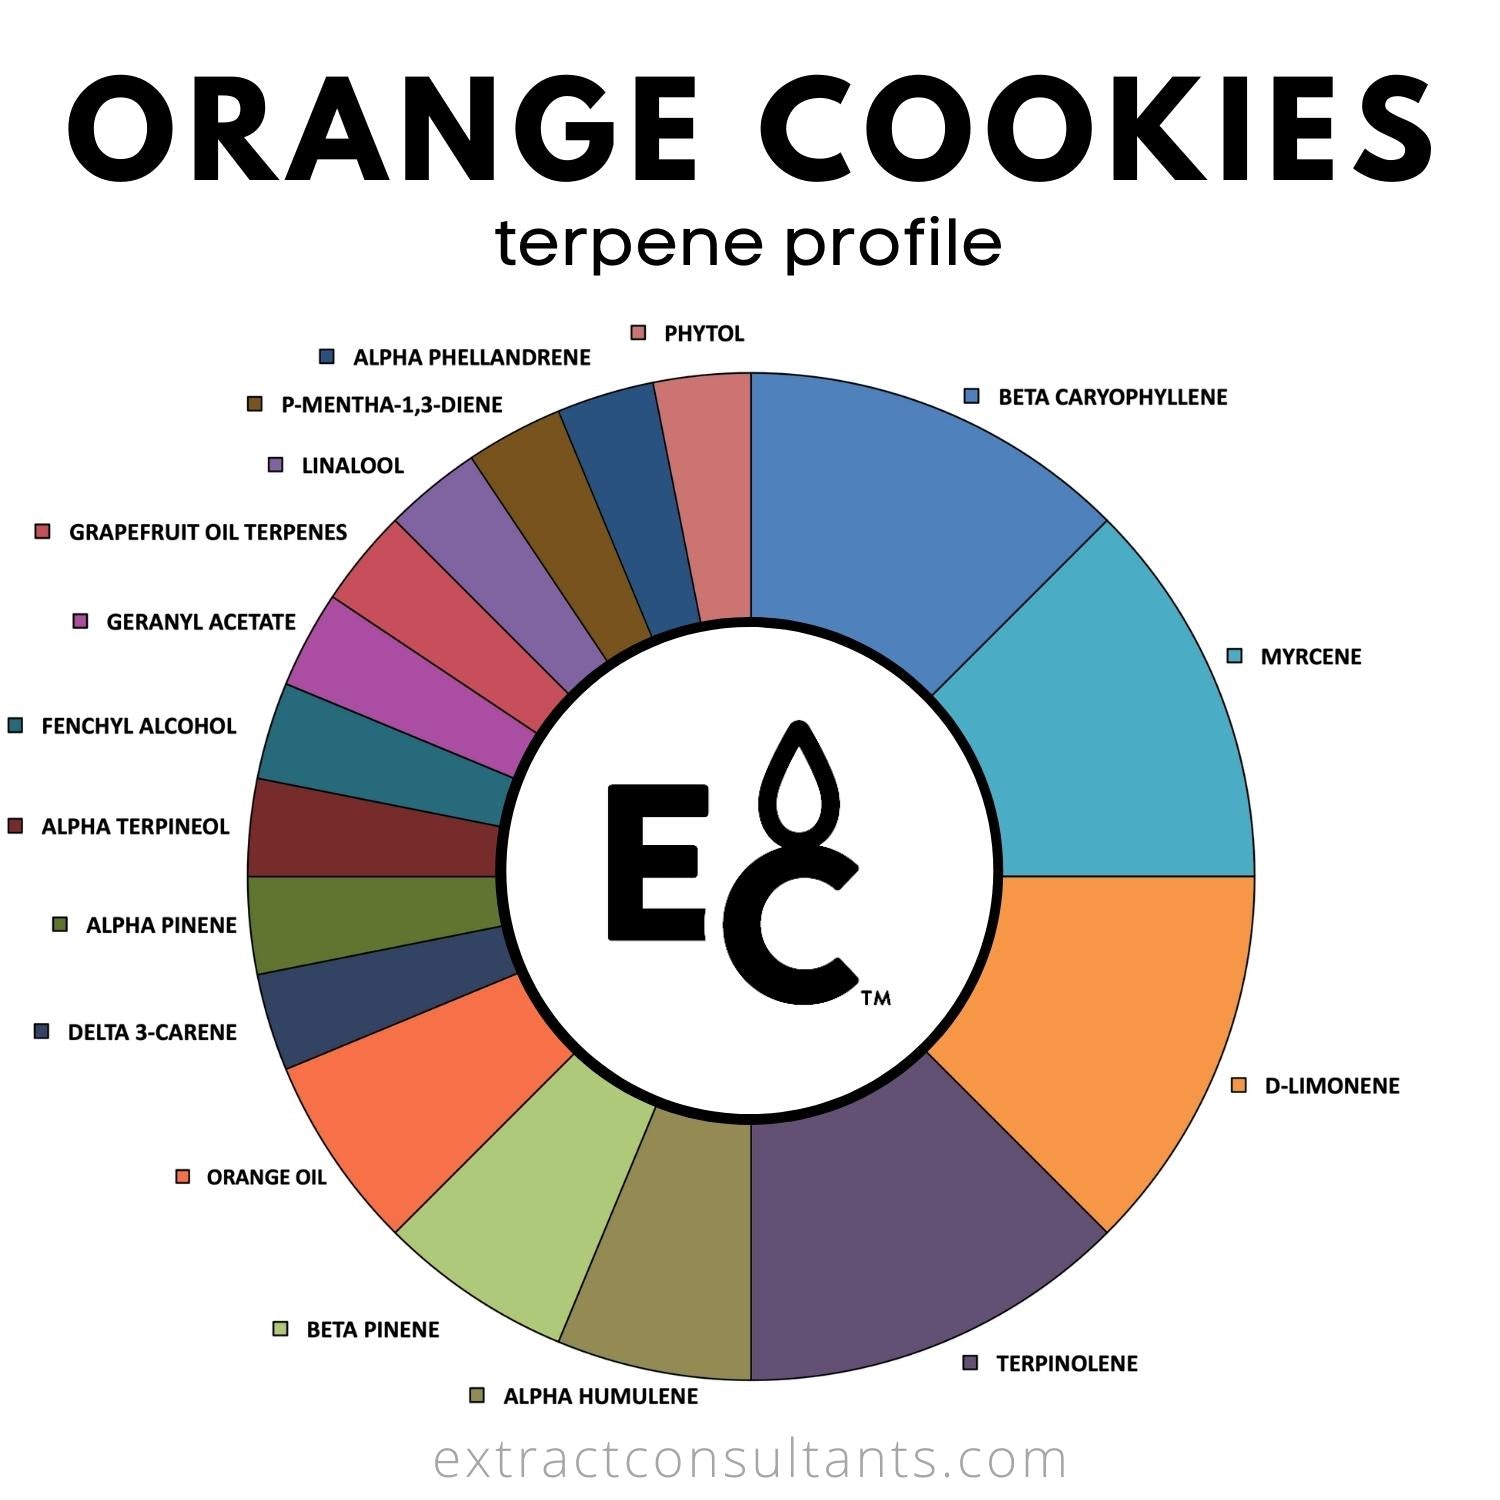 orange cookies terpene profile